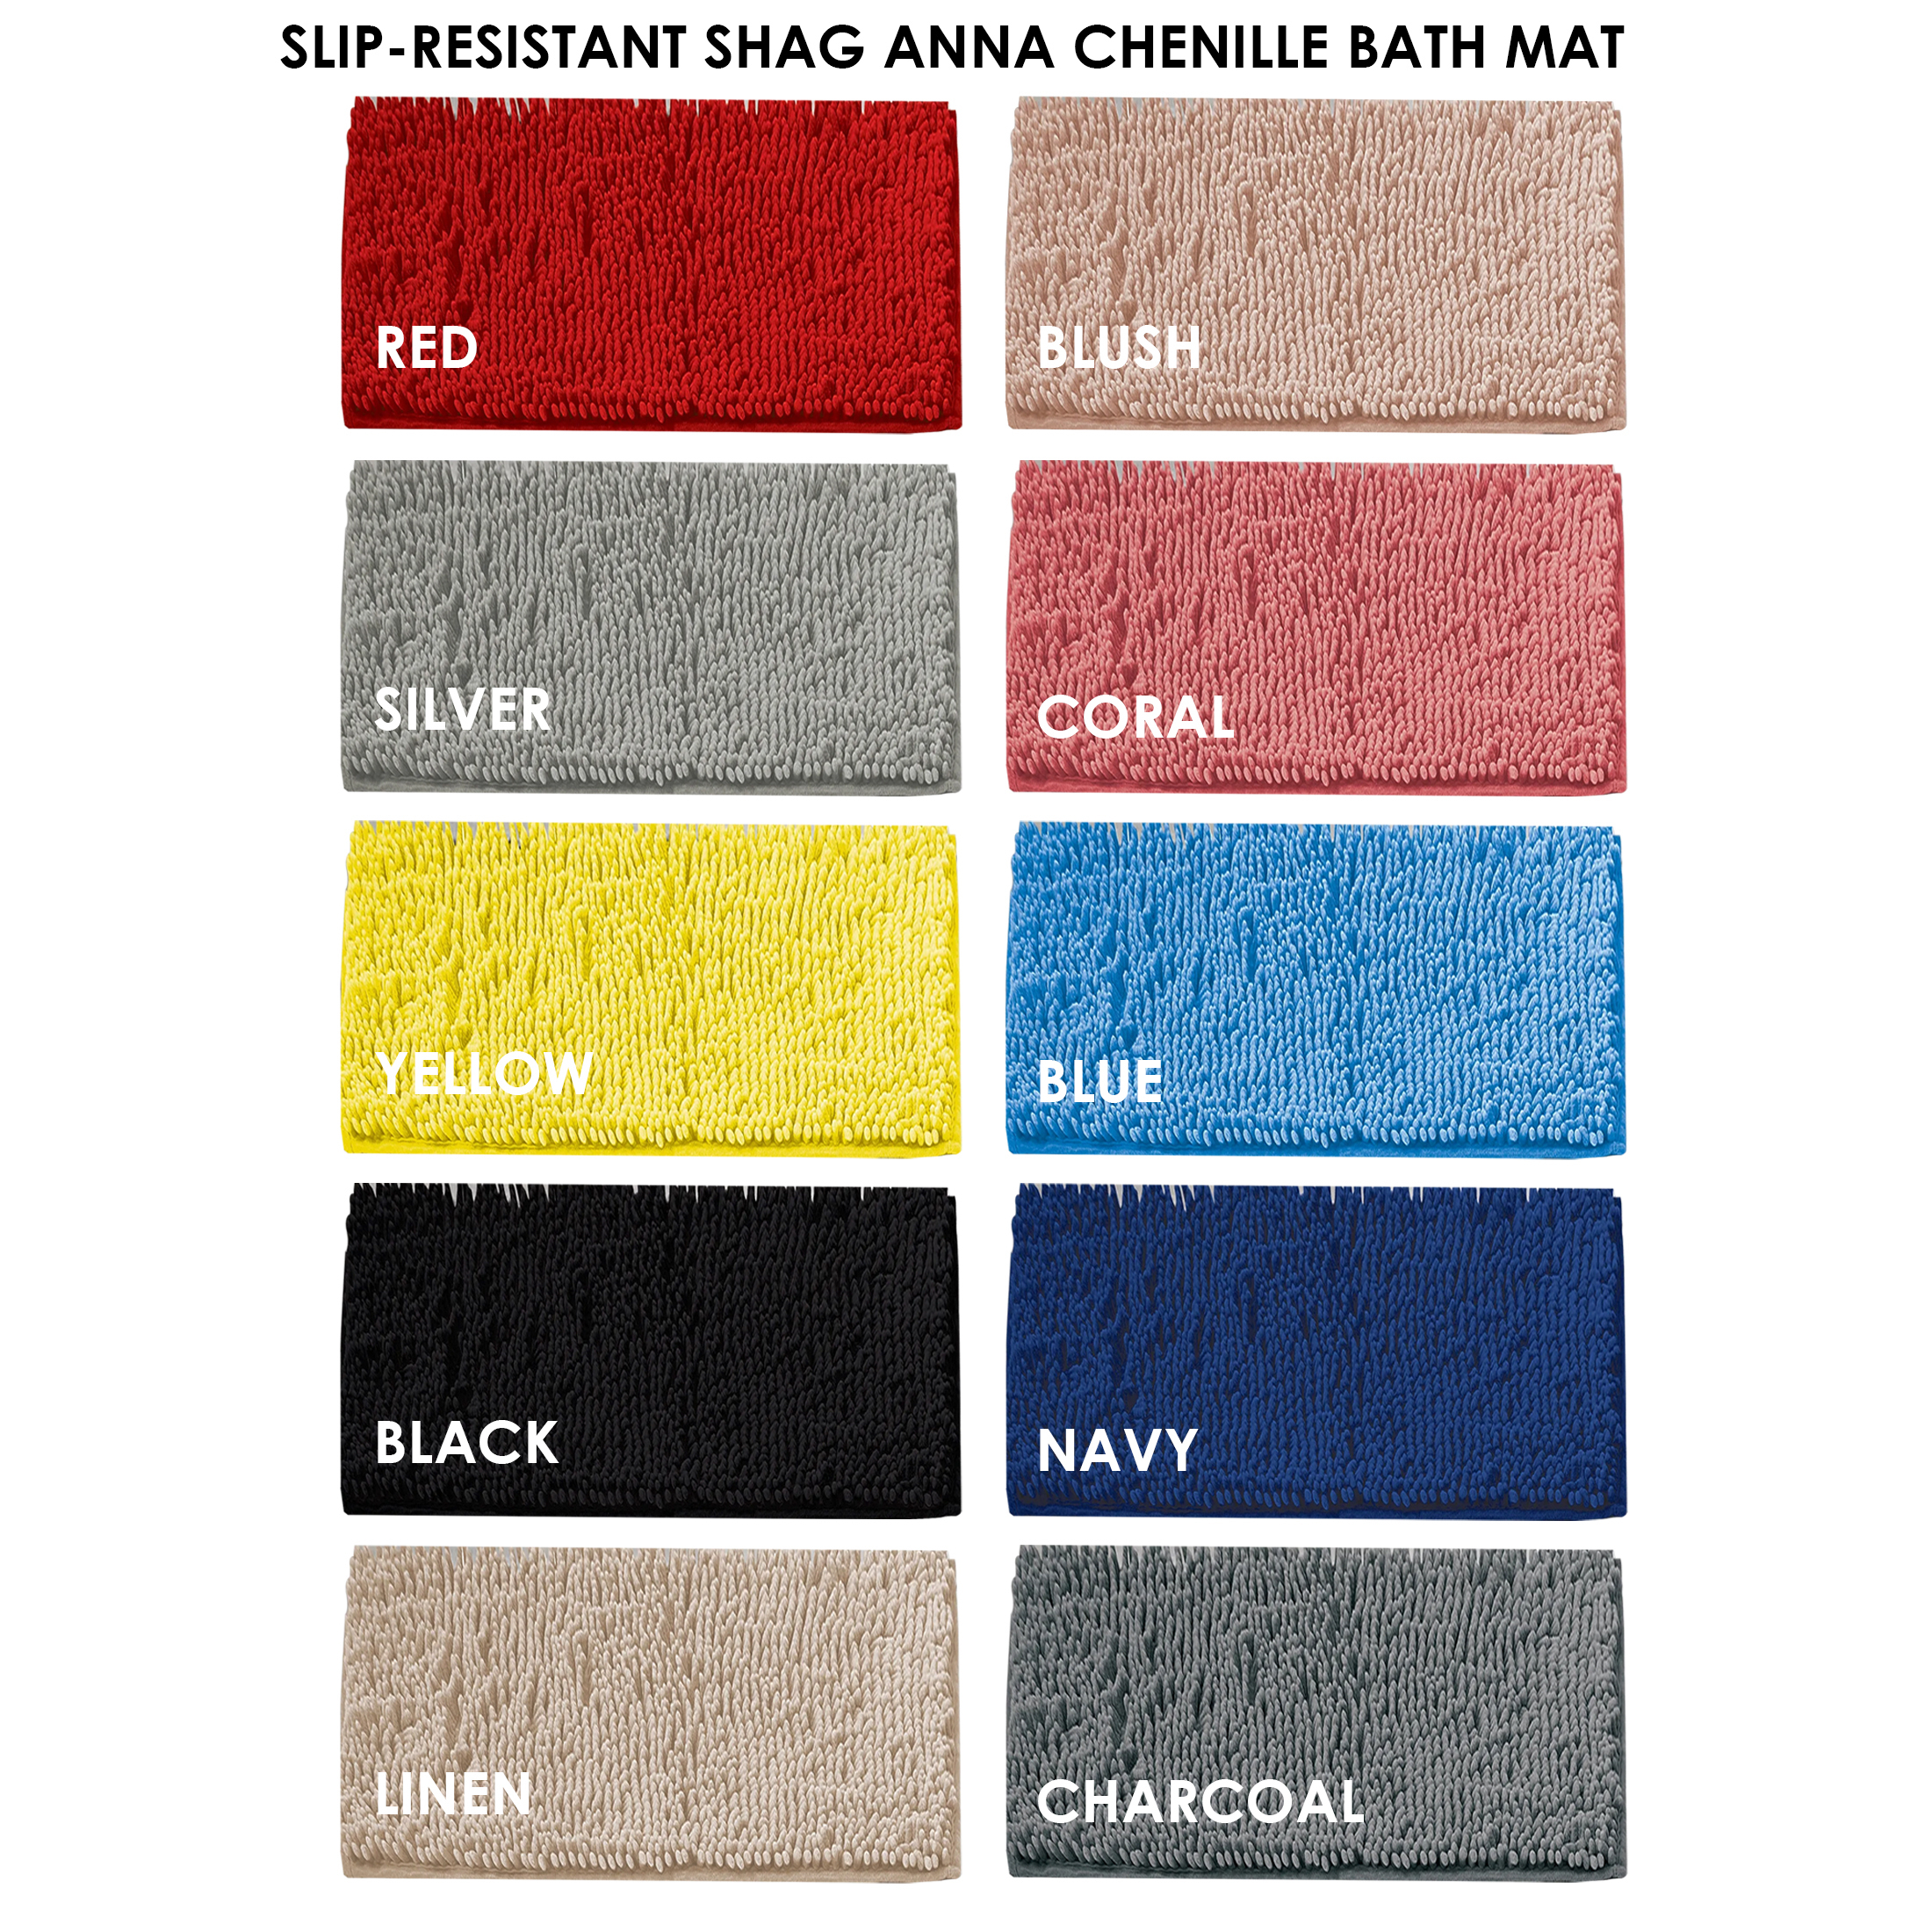 Slip-Resistant Shag Anna Chenille Soft Absorbent Bath Mat Bathroom Rug 17 X 24 - Red